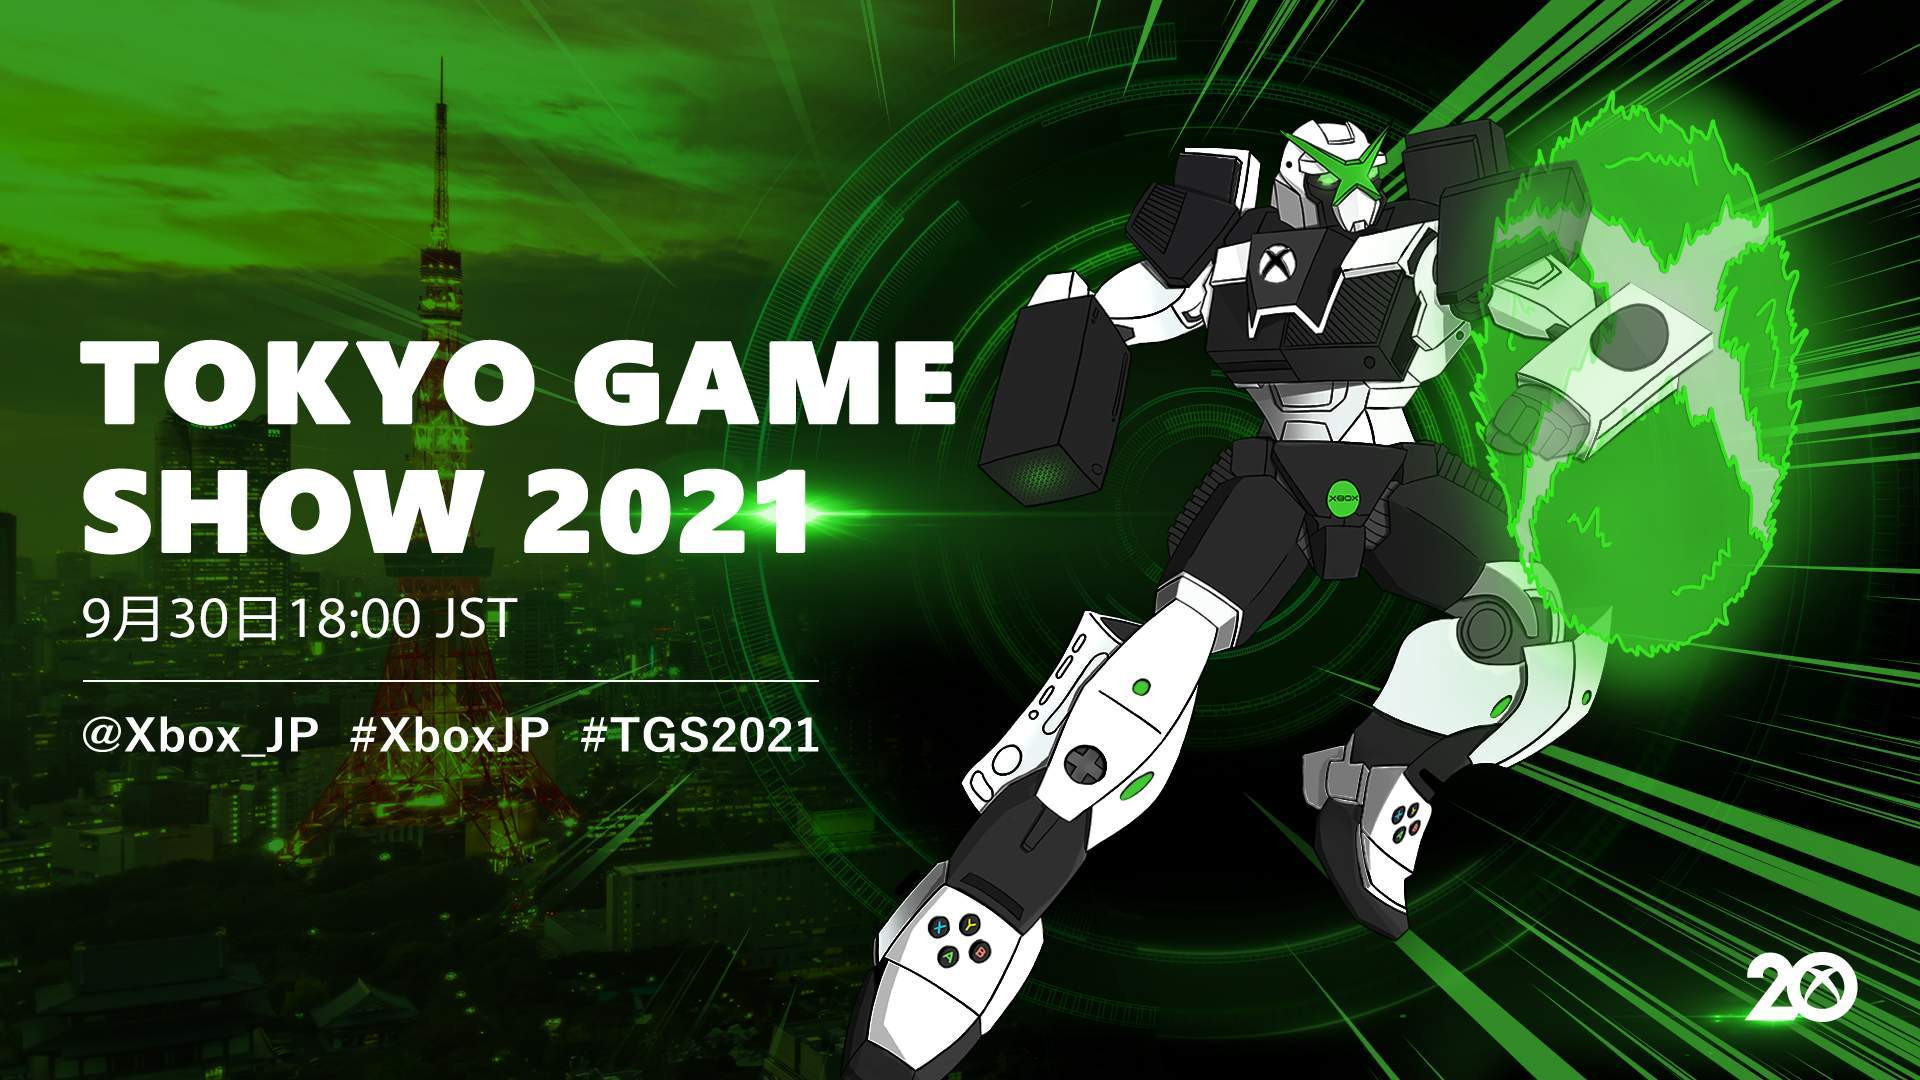 La Xbox present lors du Tokyo Game Show 2021 !